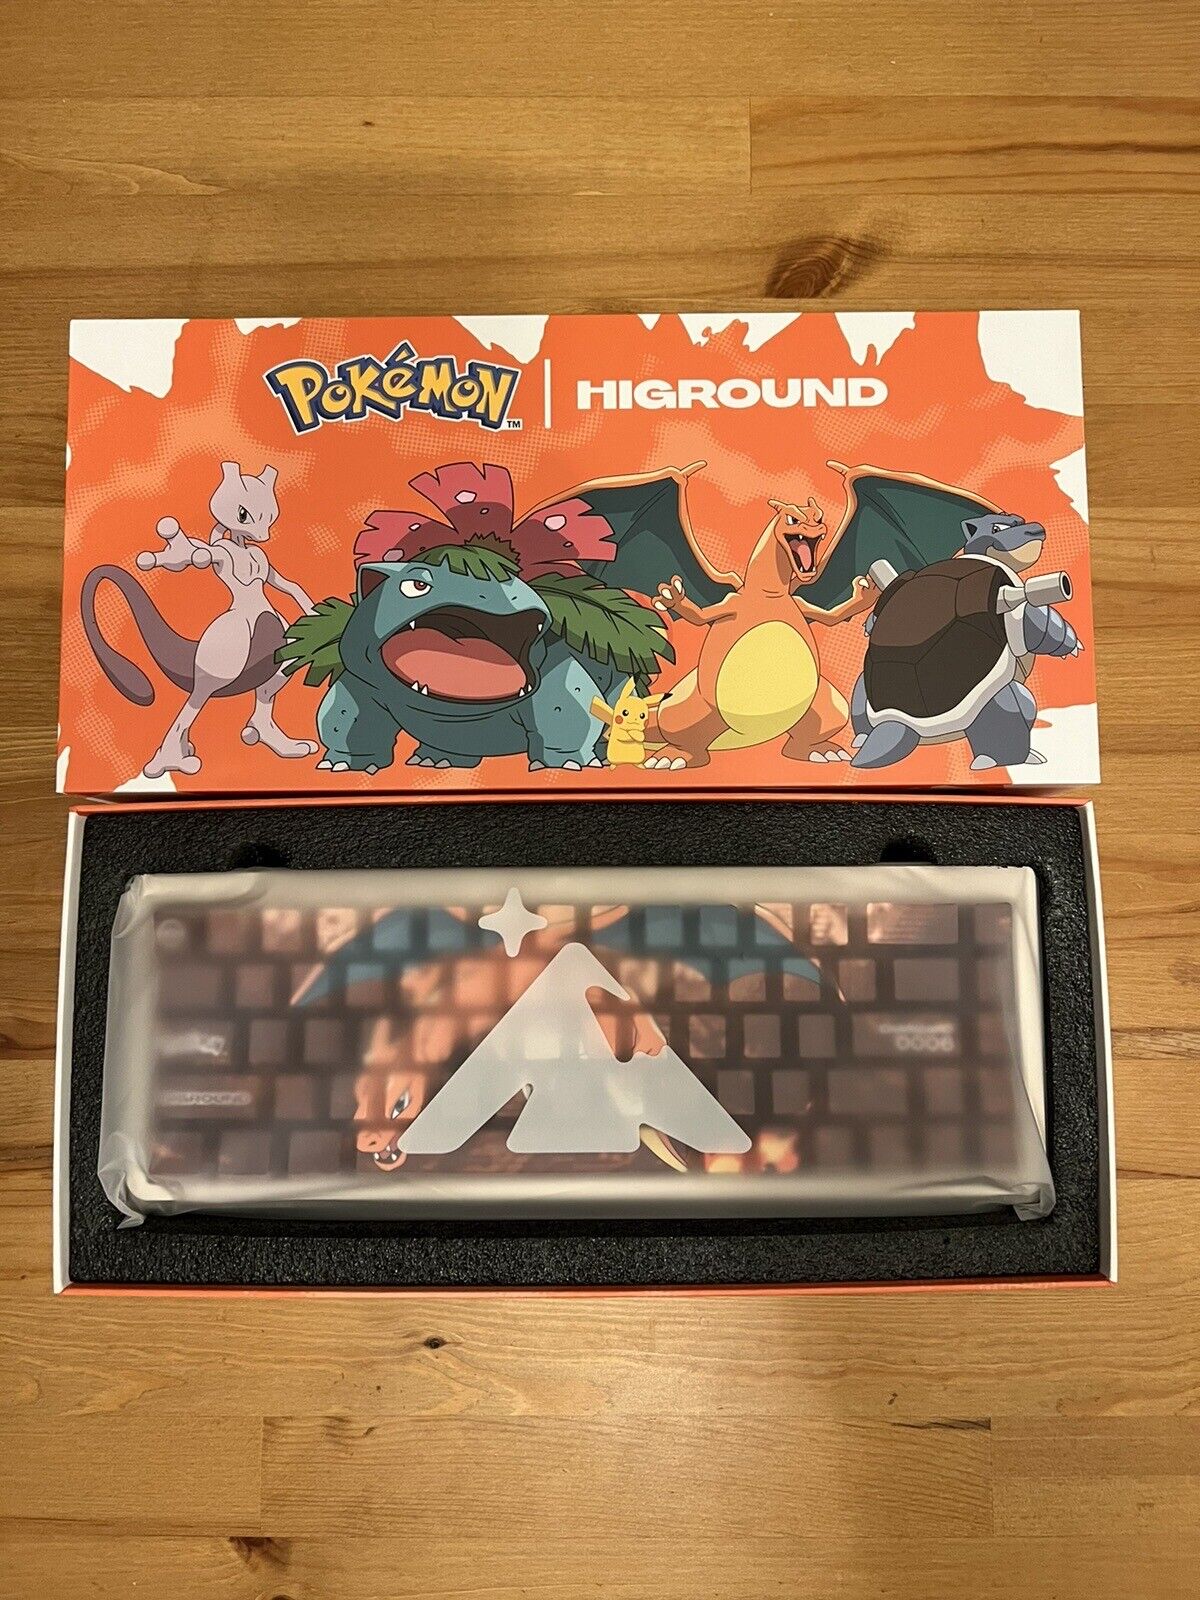 Pokémon X Charizard Higround Summit 65 Keyboard 2.0 -